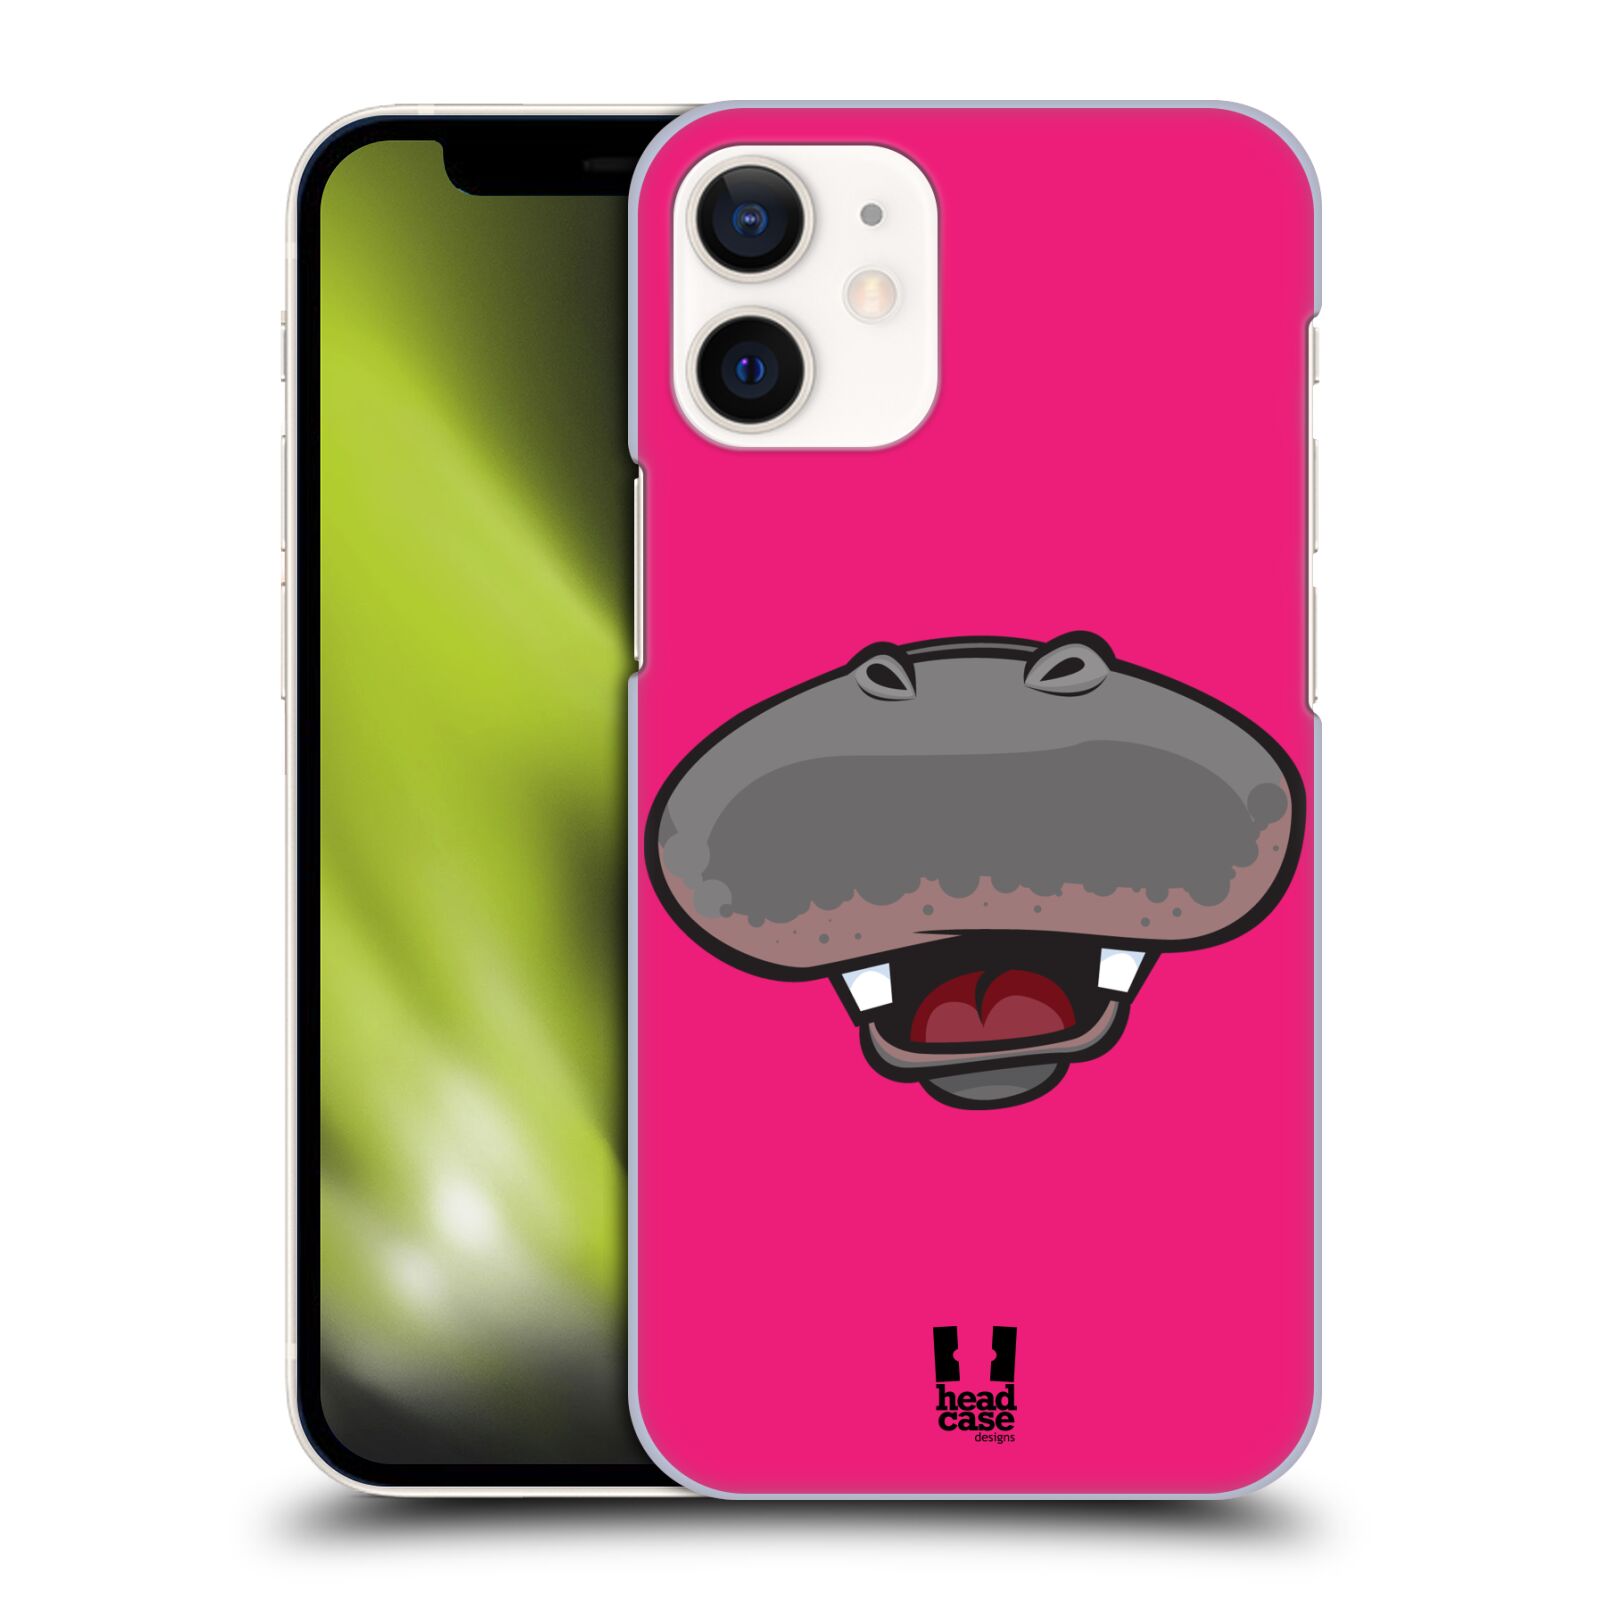 Plastový obal na mobil Apple Iphone 12 MINI vzor Zvířecí úsměv hroch růžová